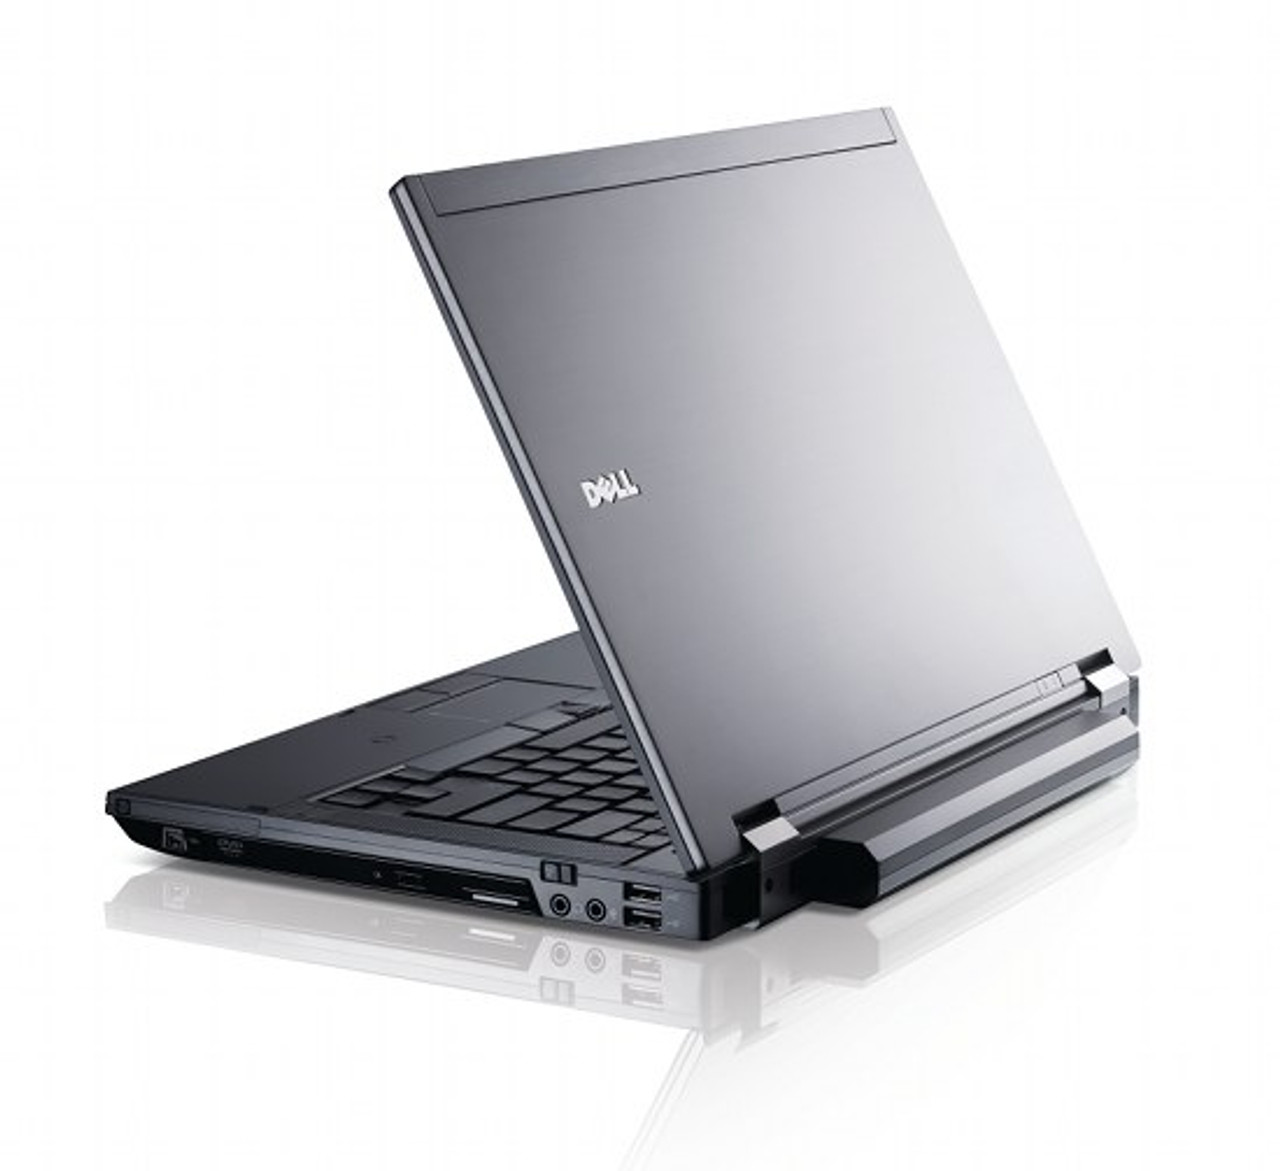 Dell Latitude E6410 Laptop Core i5 2.53GHz, 4GB Ram, 250GB HDD, DVD-RW, Windows 10 Pro 64 Notebook